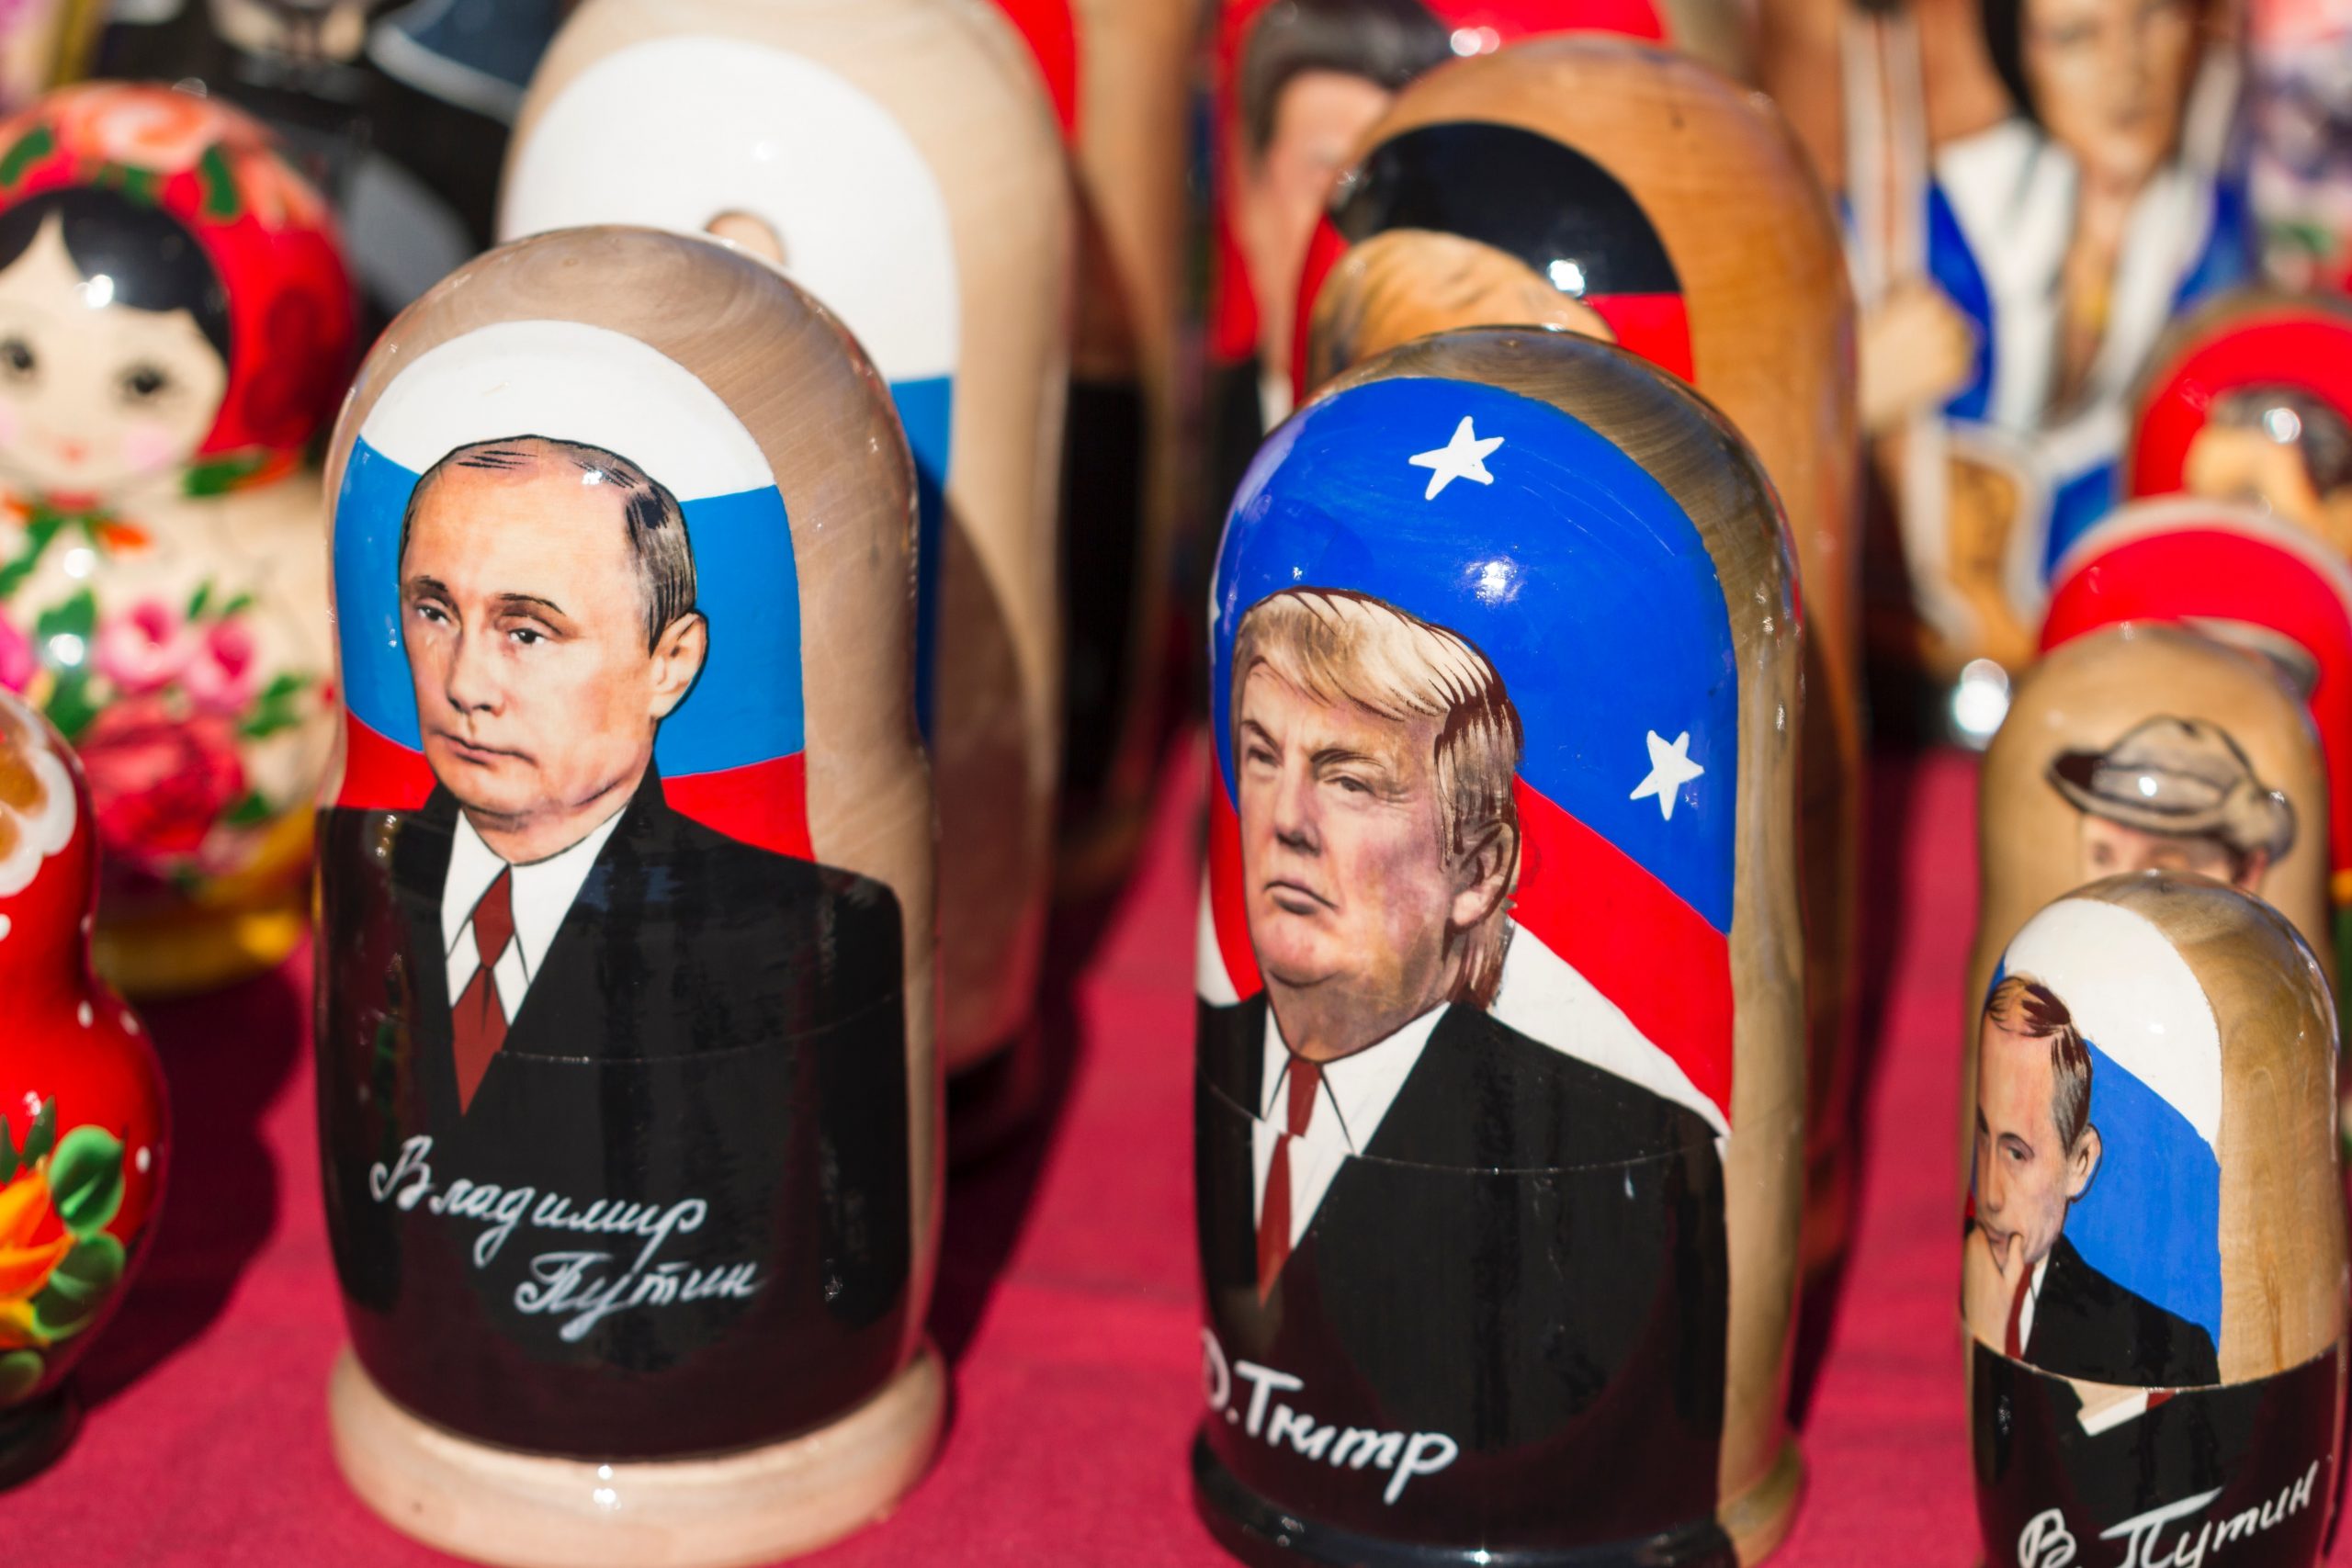 Nesting dolls with Putin and Trump 